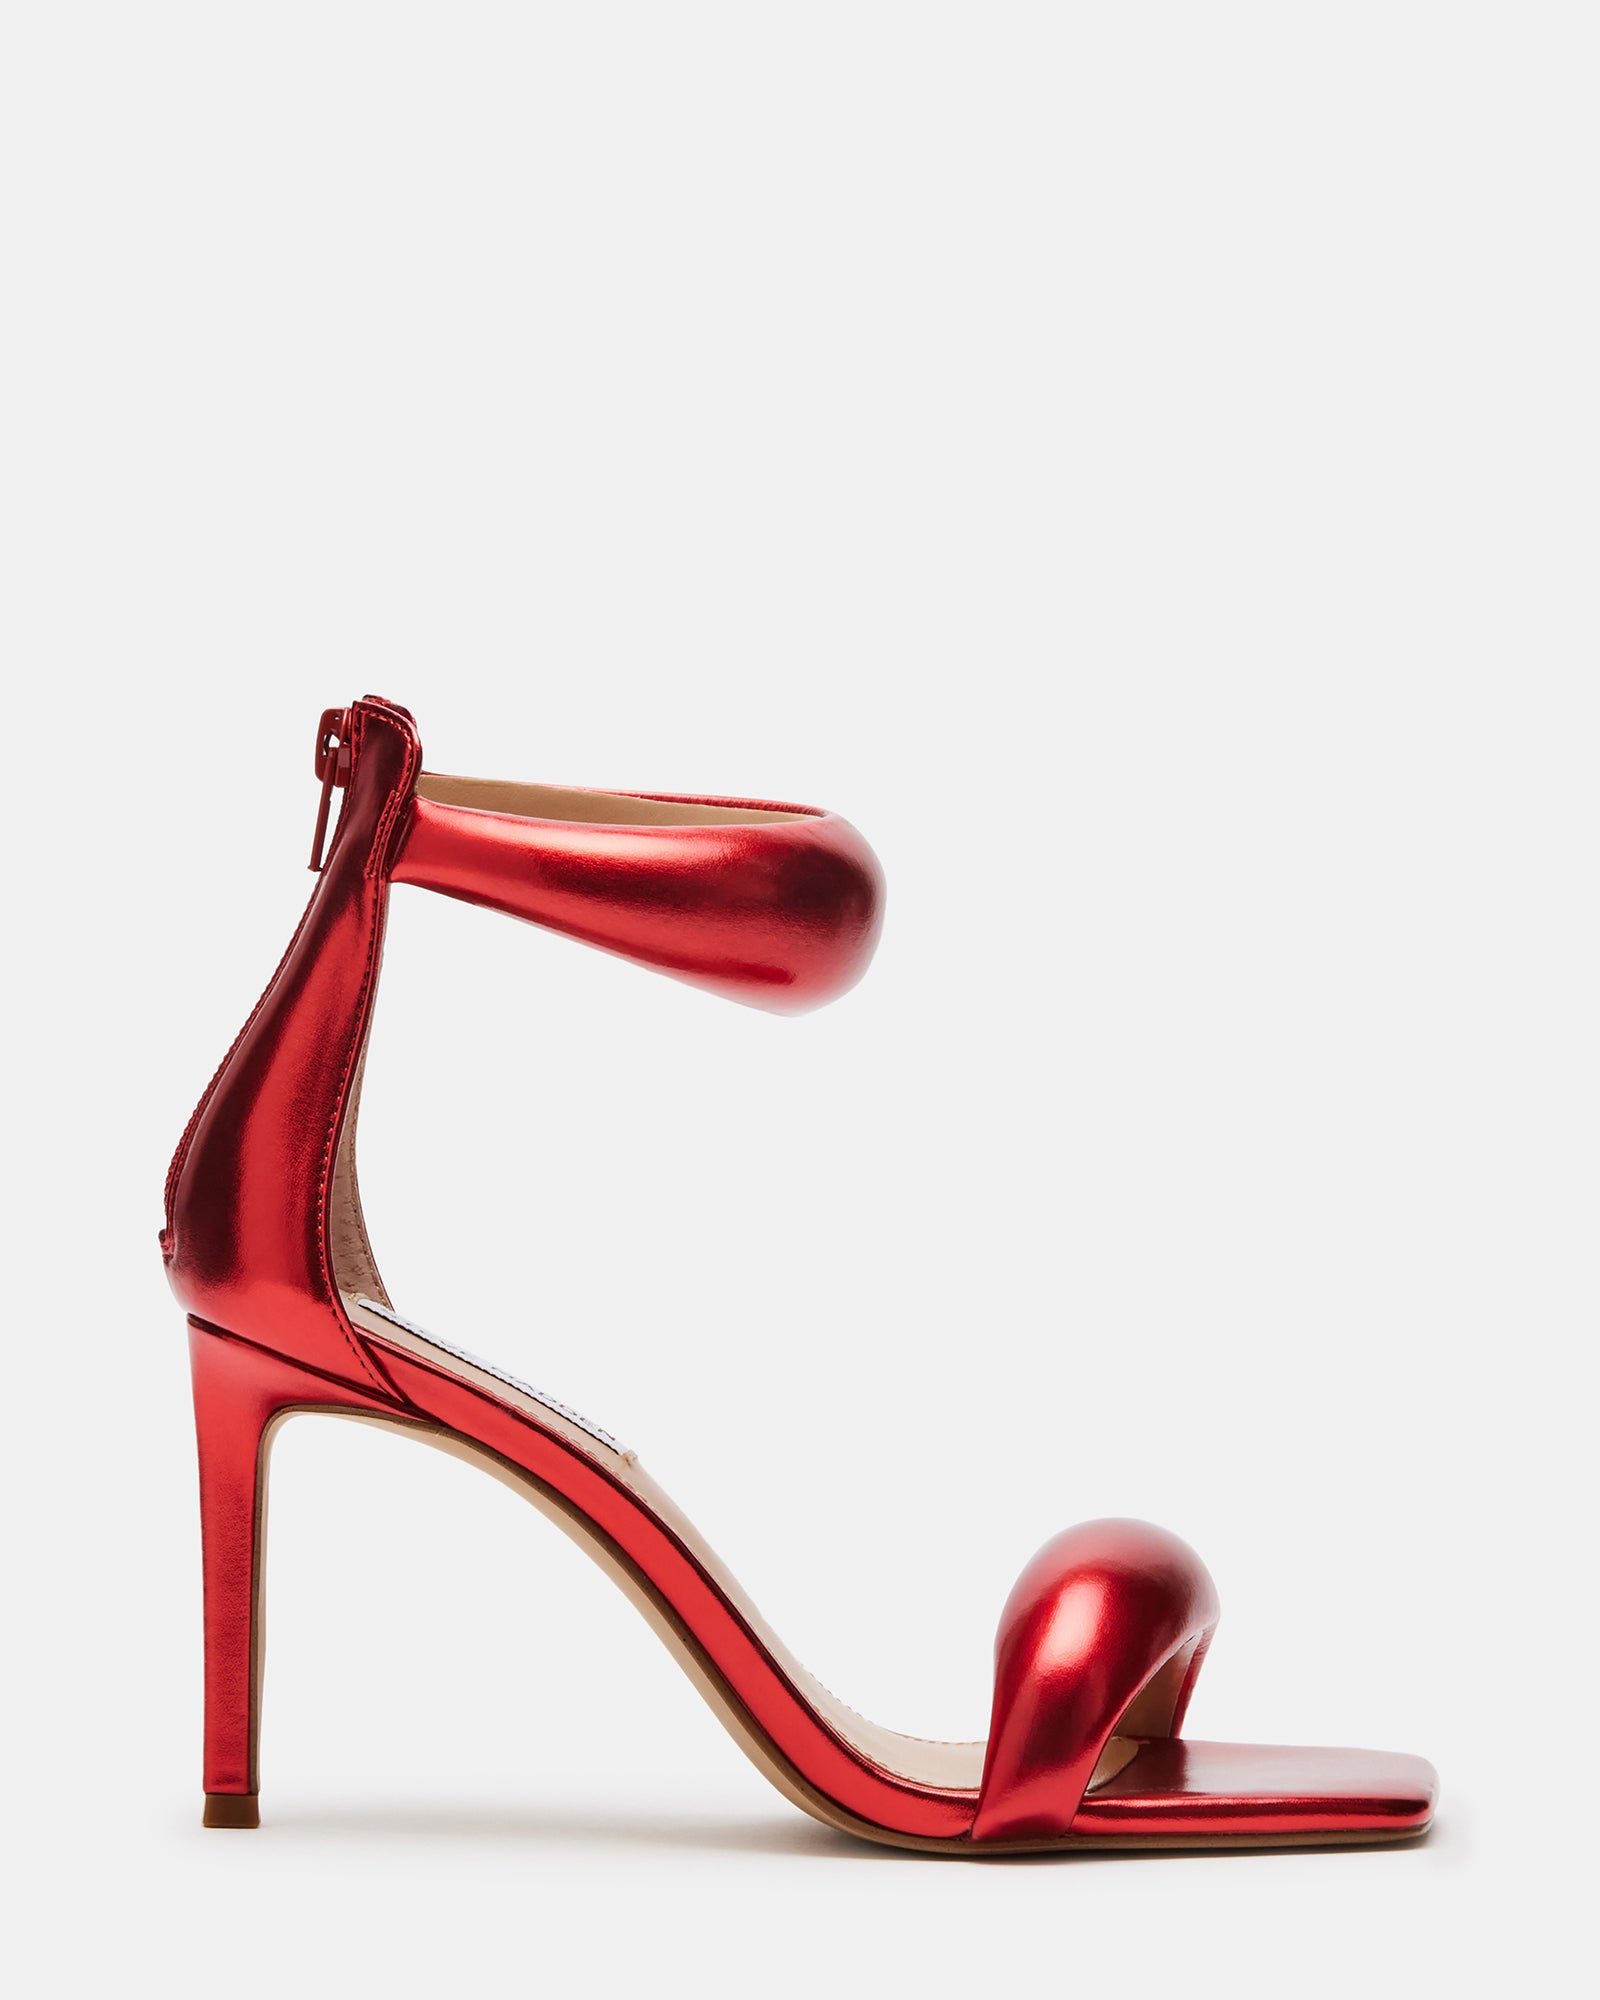 red heels | Red high heels, Heels, Christian louboutin wedding shoes